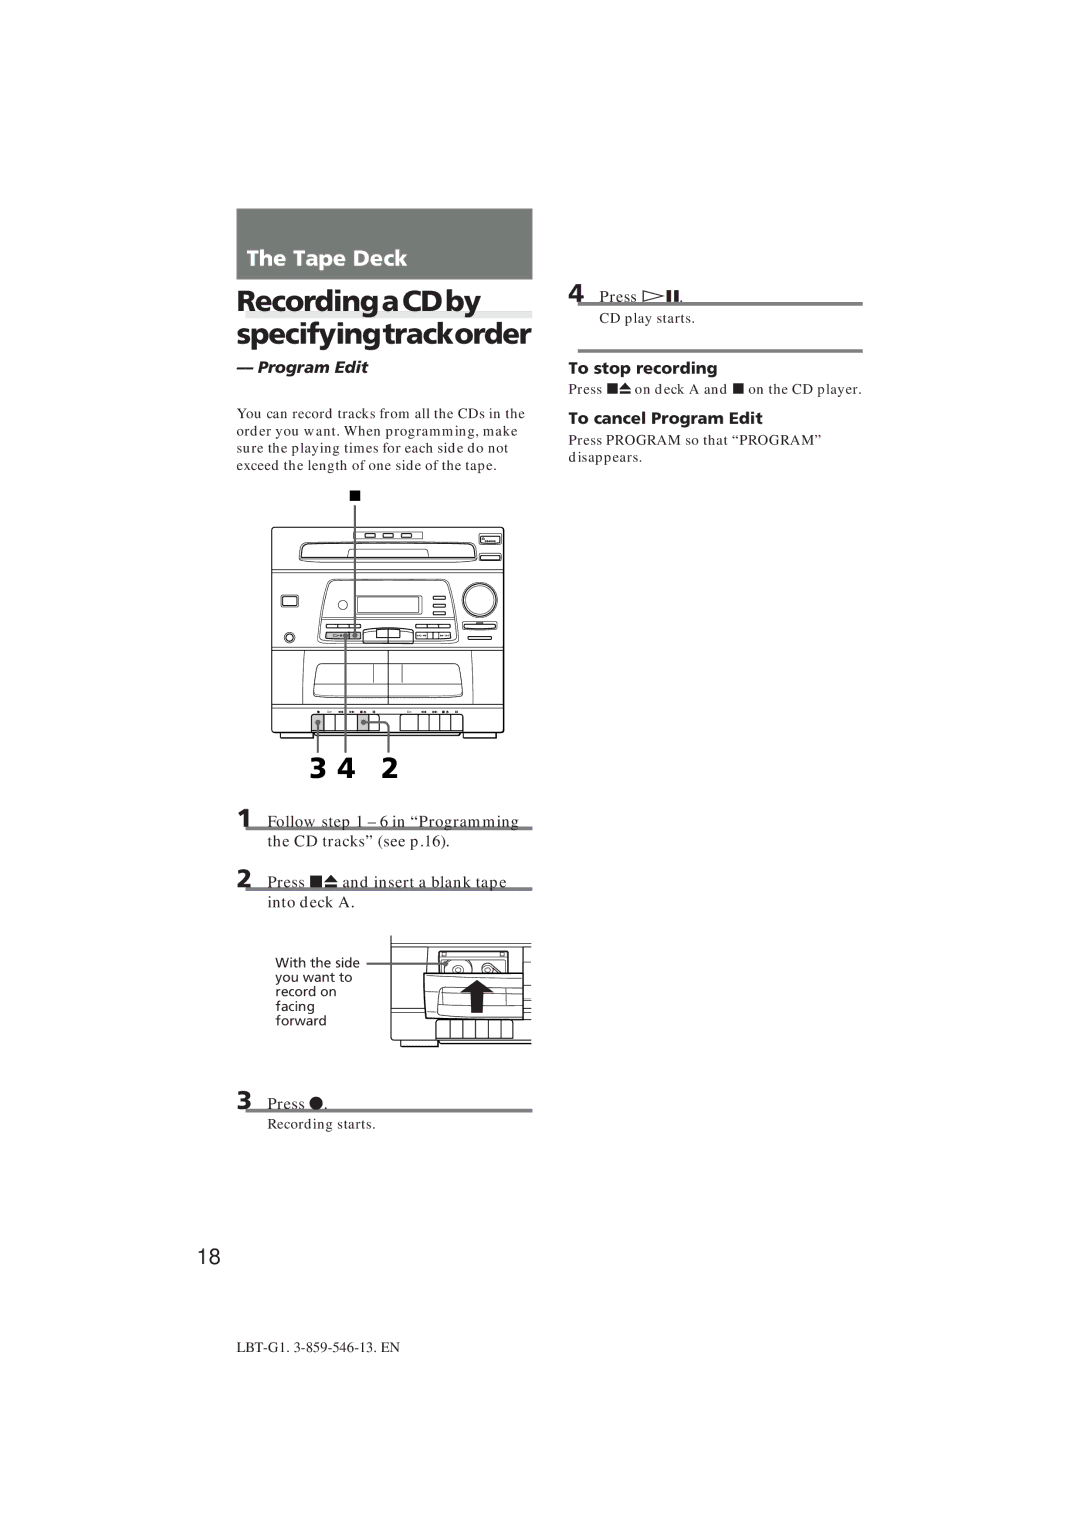 Sony LBT-G1 manual RecordingaCDby specifyingtrackorder, To cancel Program Edit 